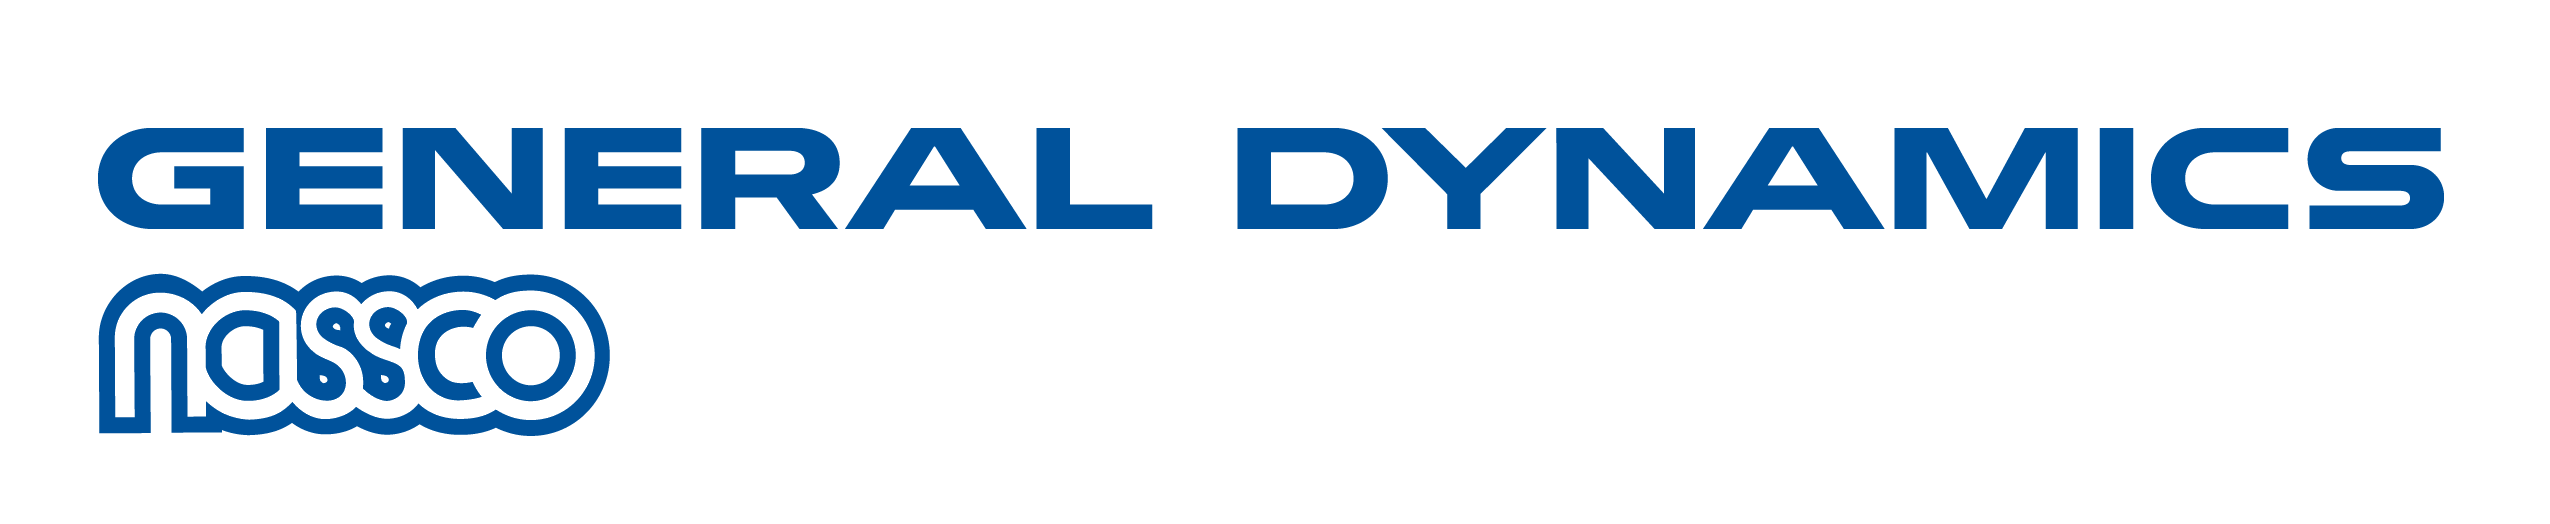 General Dynamics Logo - General Dynamics | (GD) ™ General Dynamics Corporation.corpvs ...